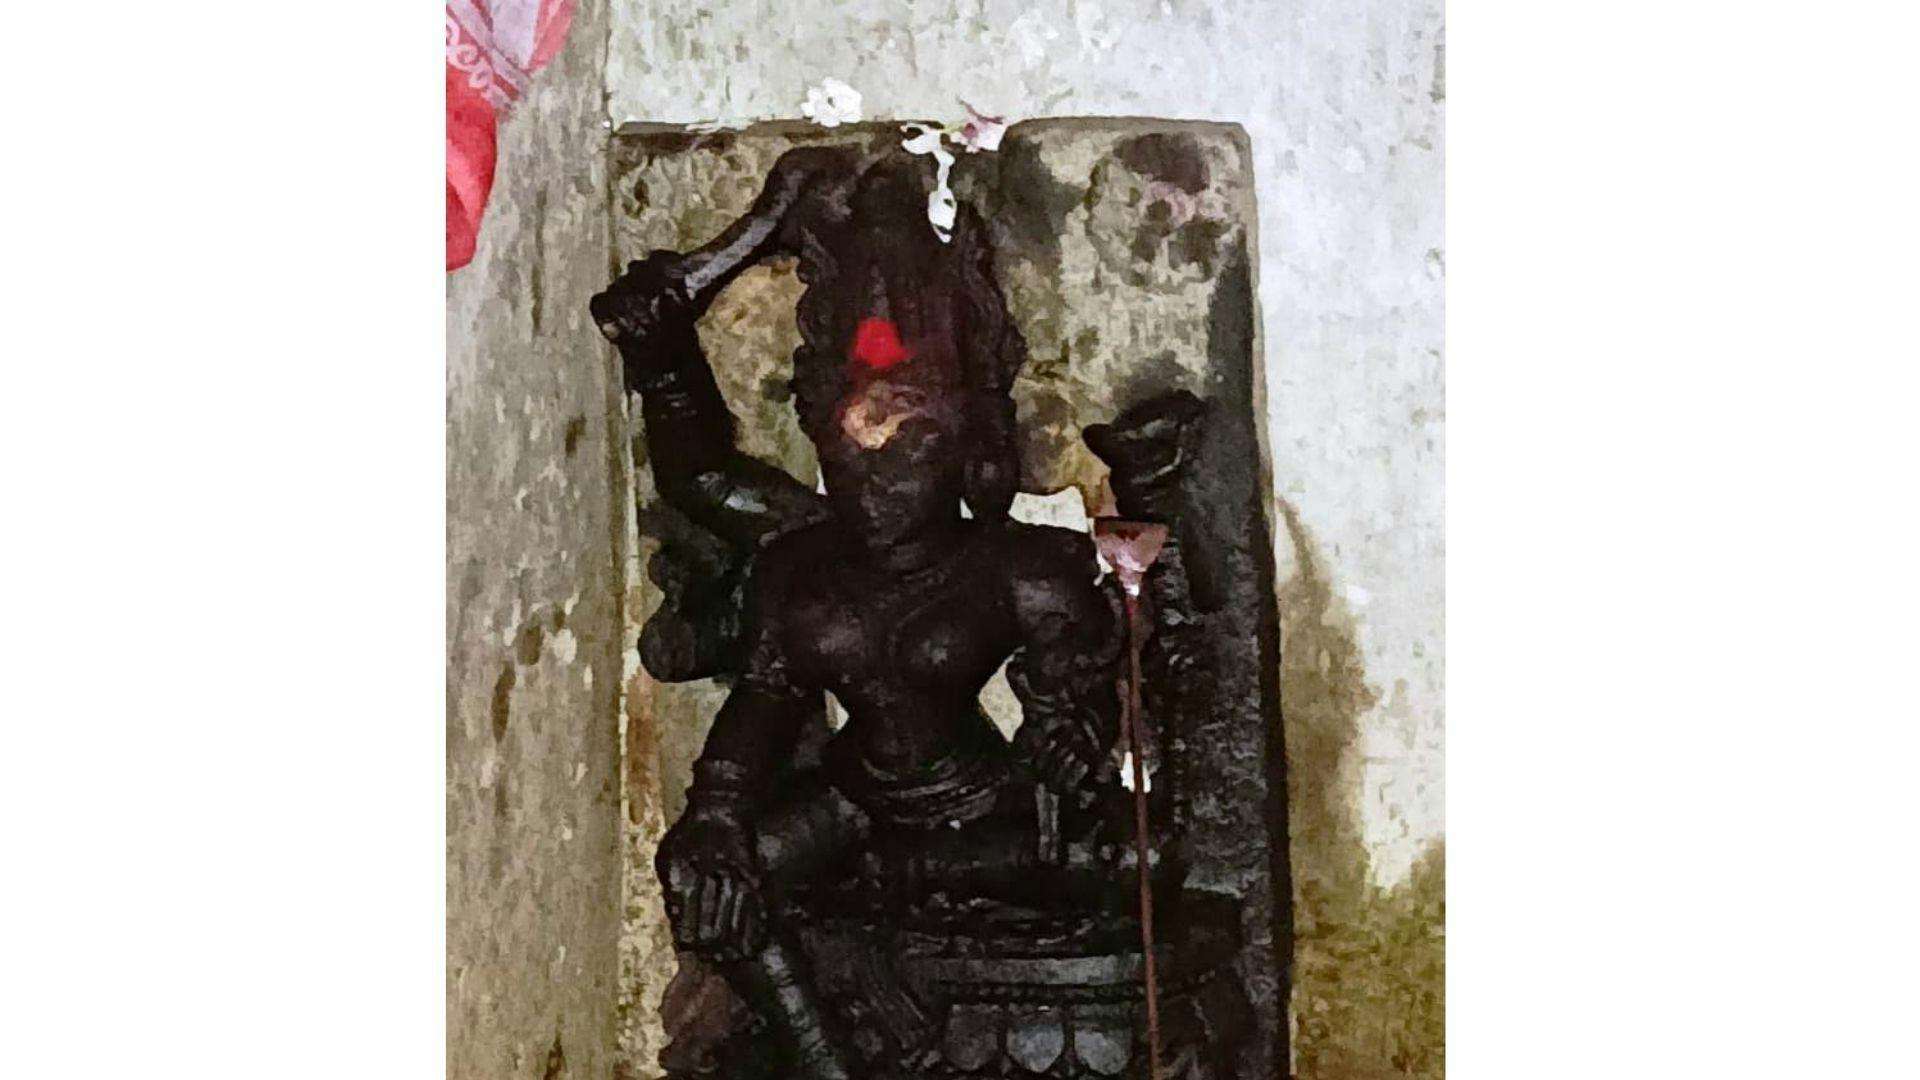 Image found in Dashwamedha Ghat, in Jajpur district of Odisha